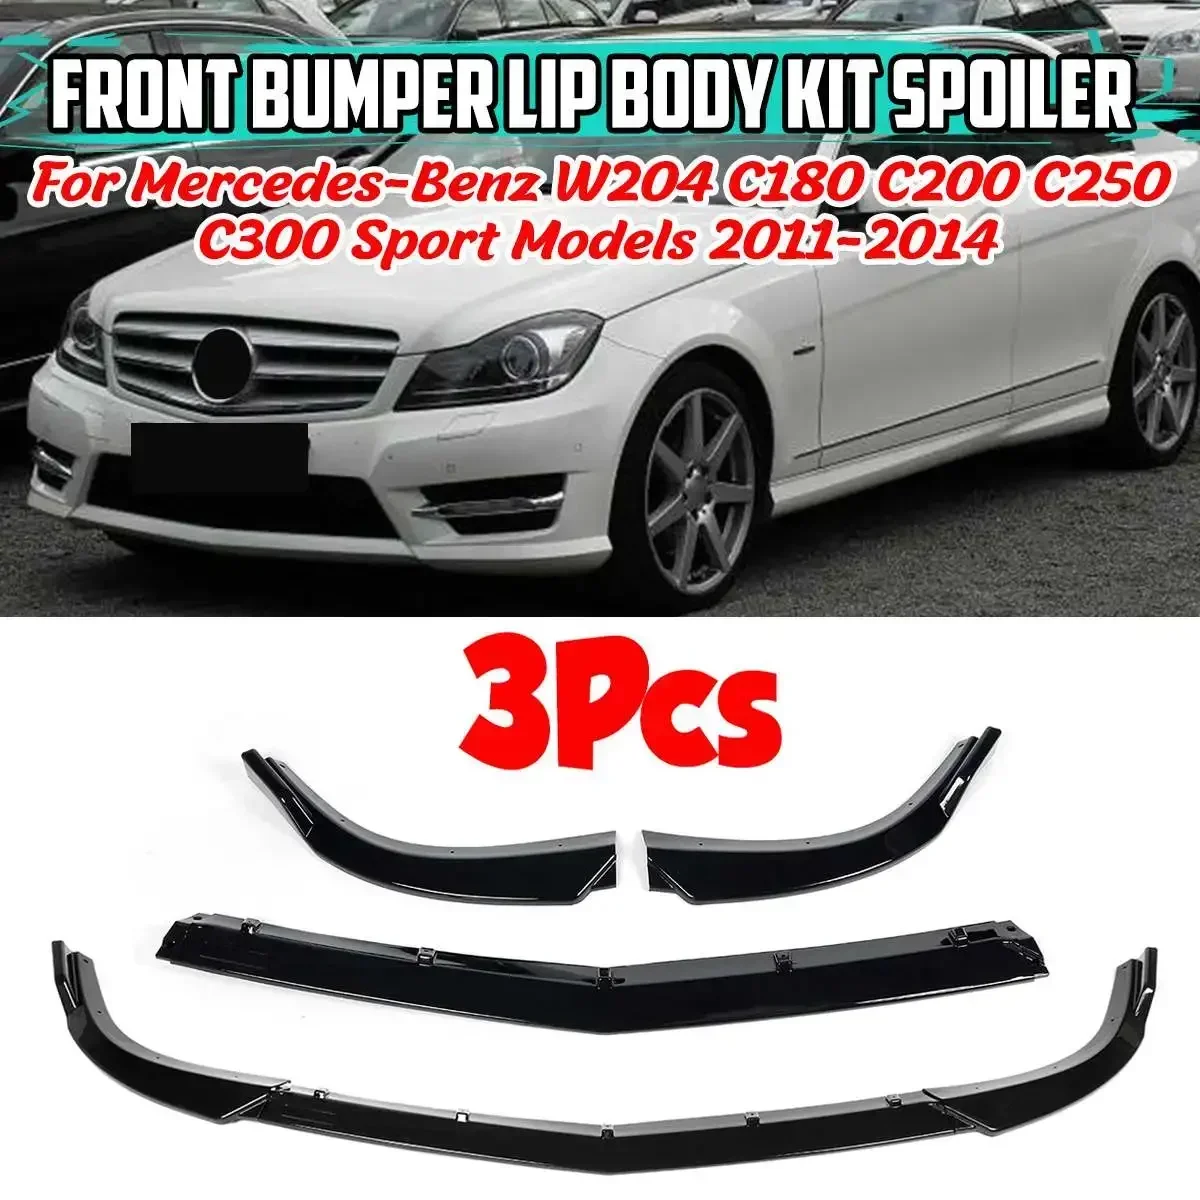 

3x Car Front Bumper Splitter Lip Spoiler Diffuser For Mercedes For Benz C CLASS W204 C180 C200 C220 C250 C300 2011-2014 Body Kit